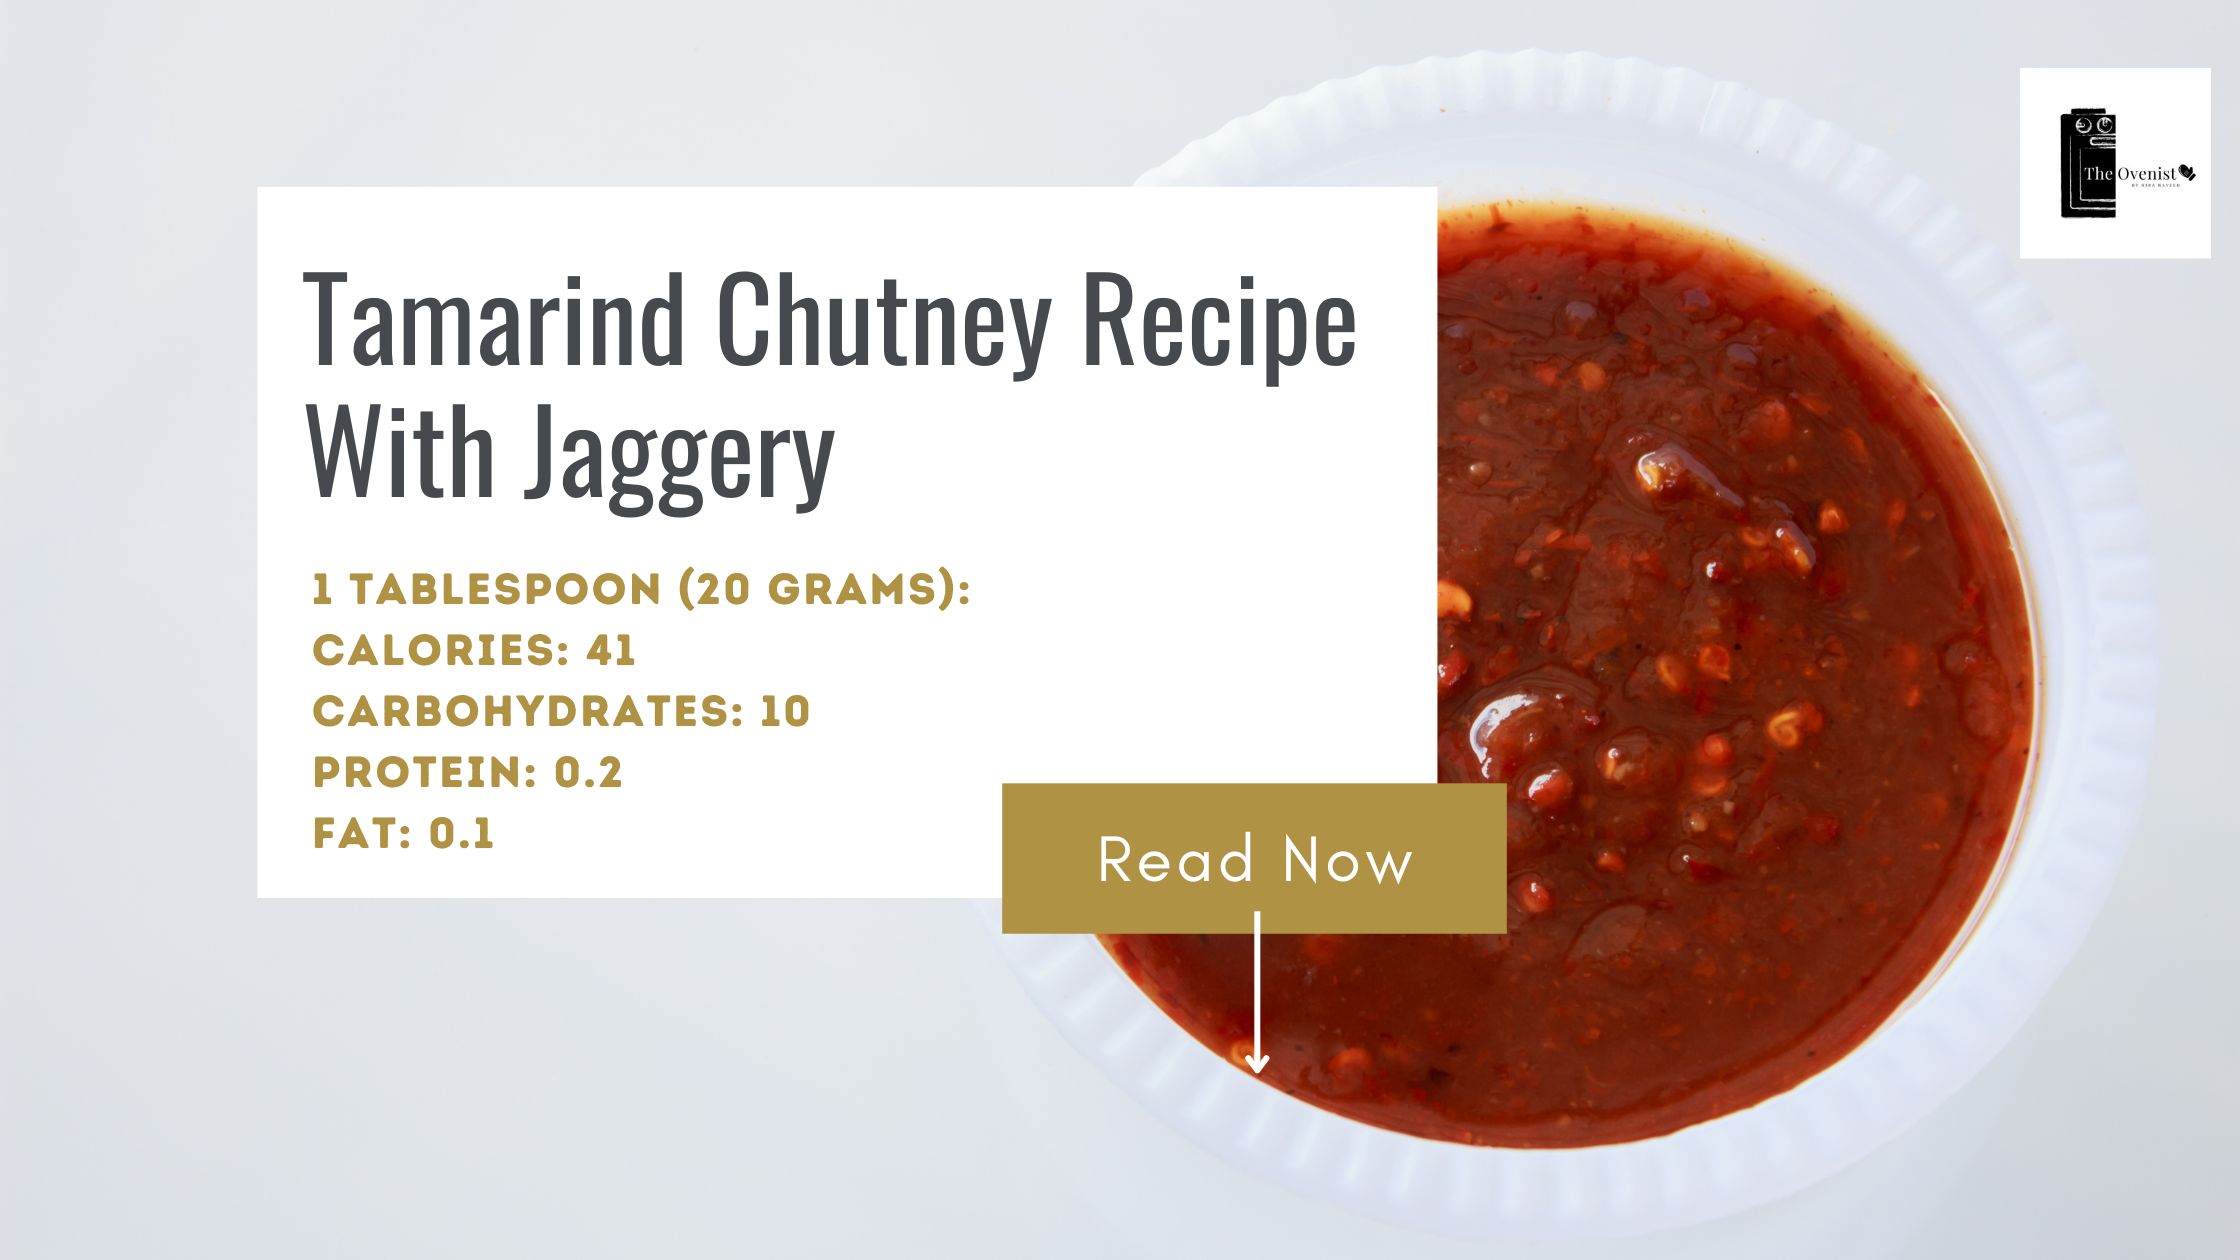 Tamarind Chutney Recipe with Jaggery